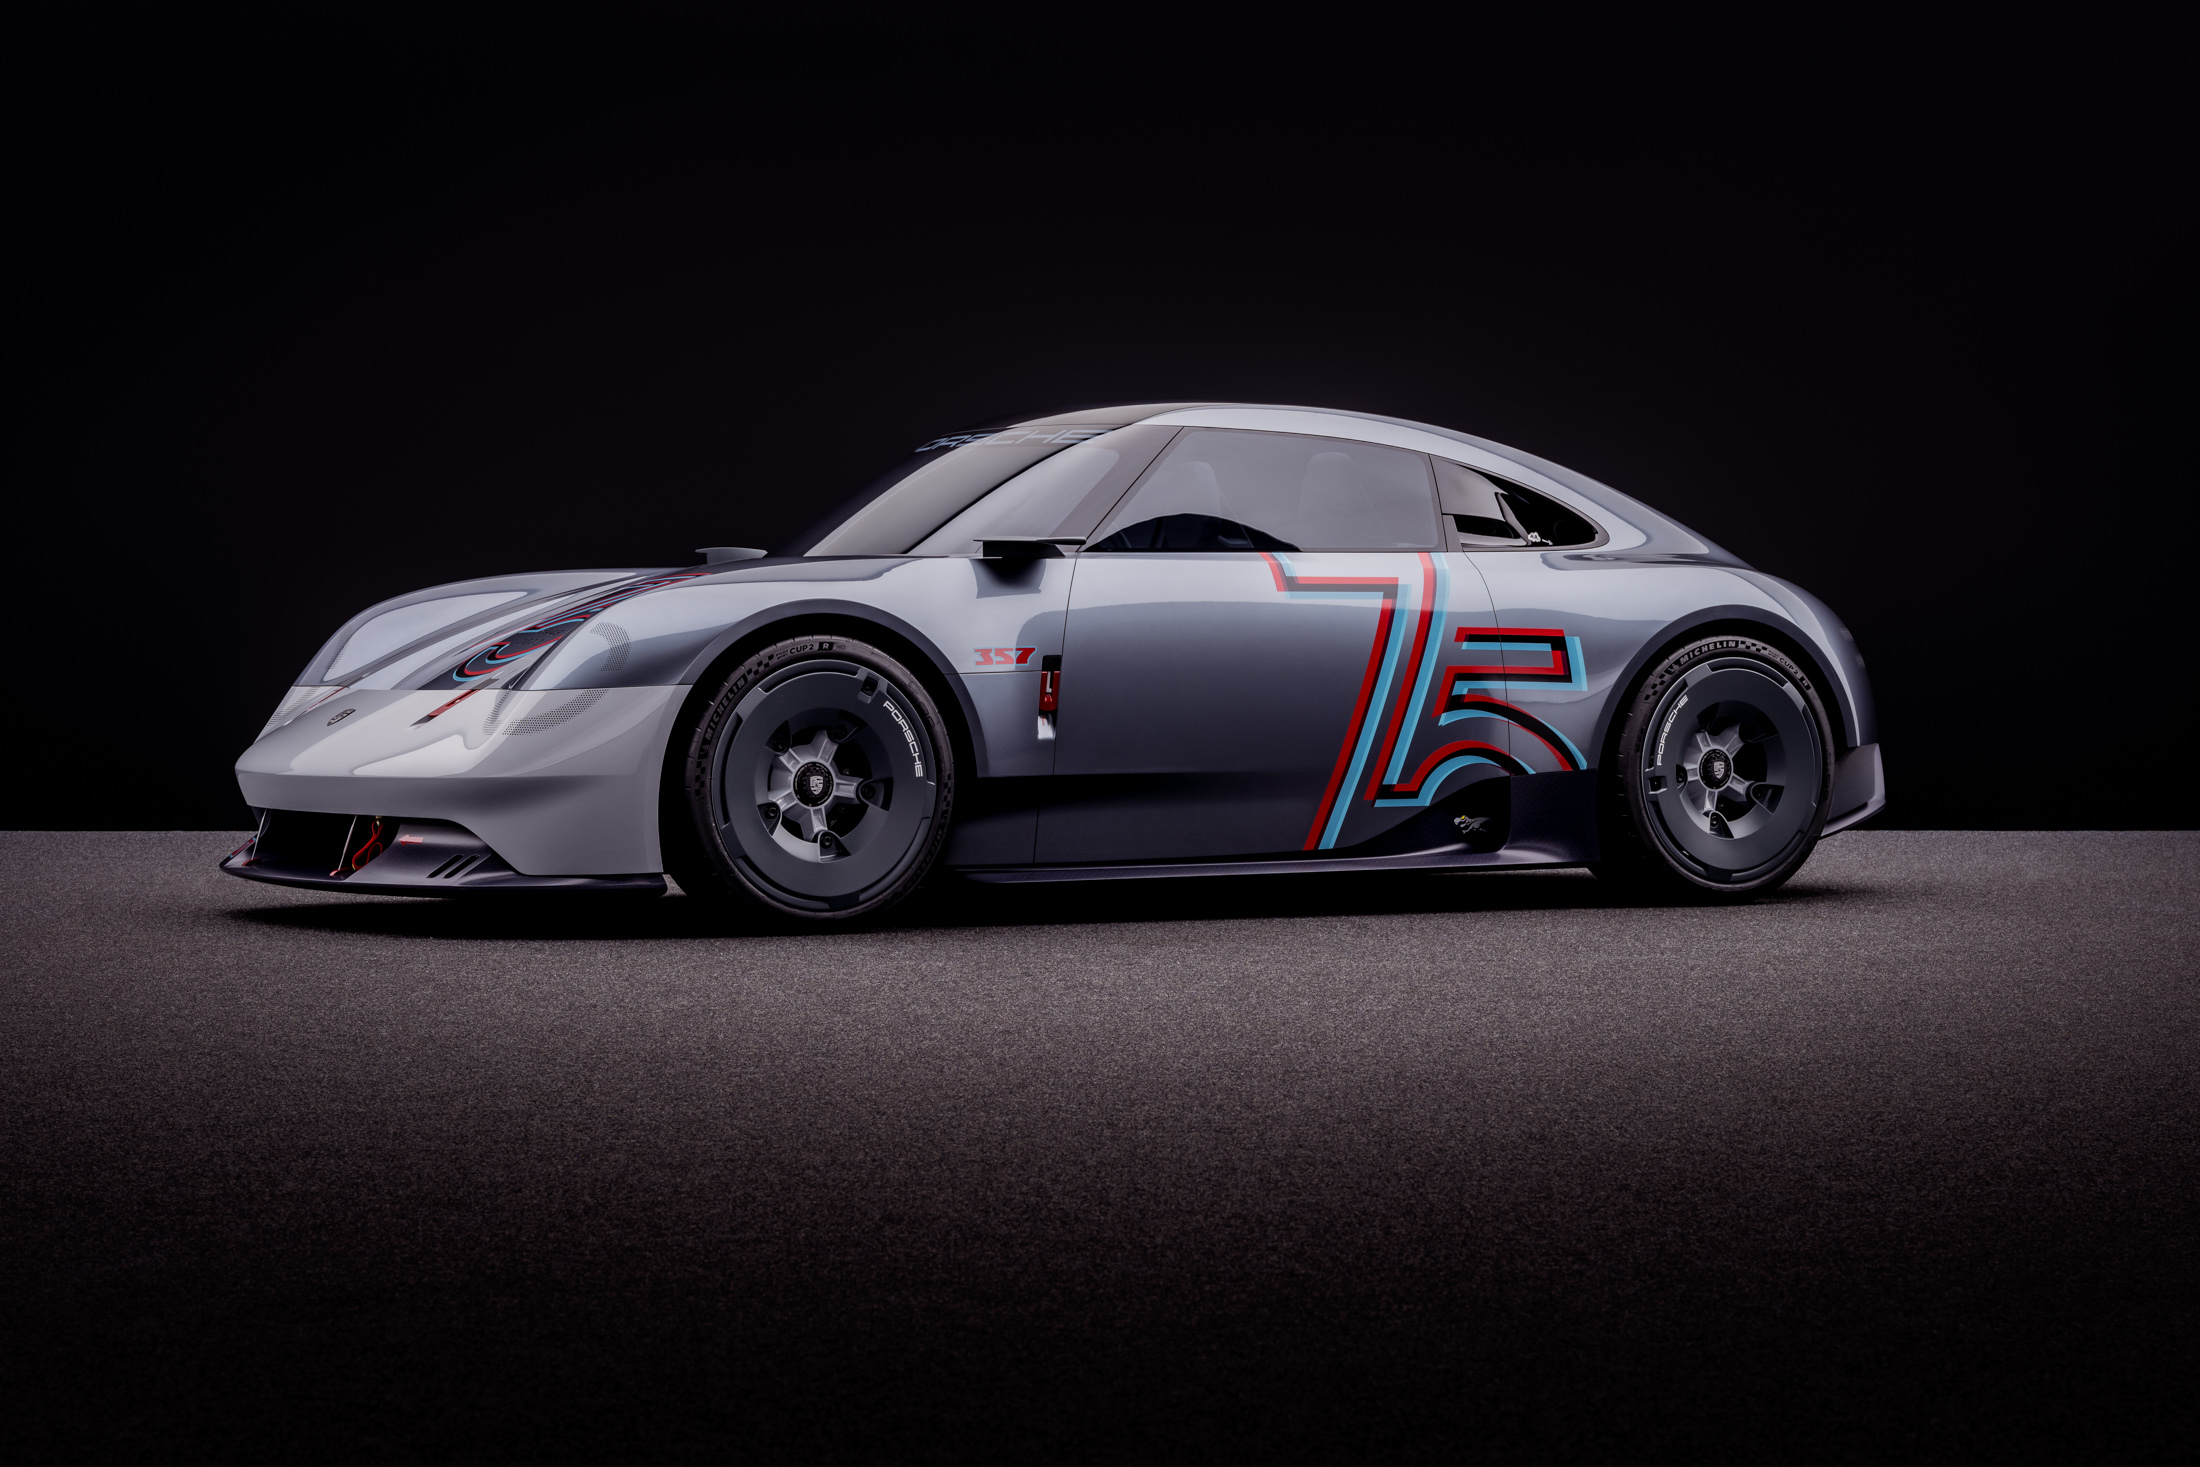 Porsche Cars North America Offers Present for Motorsport Fans